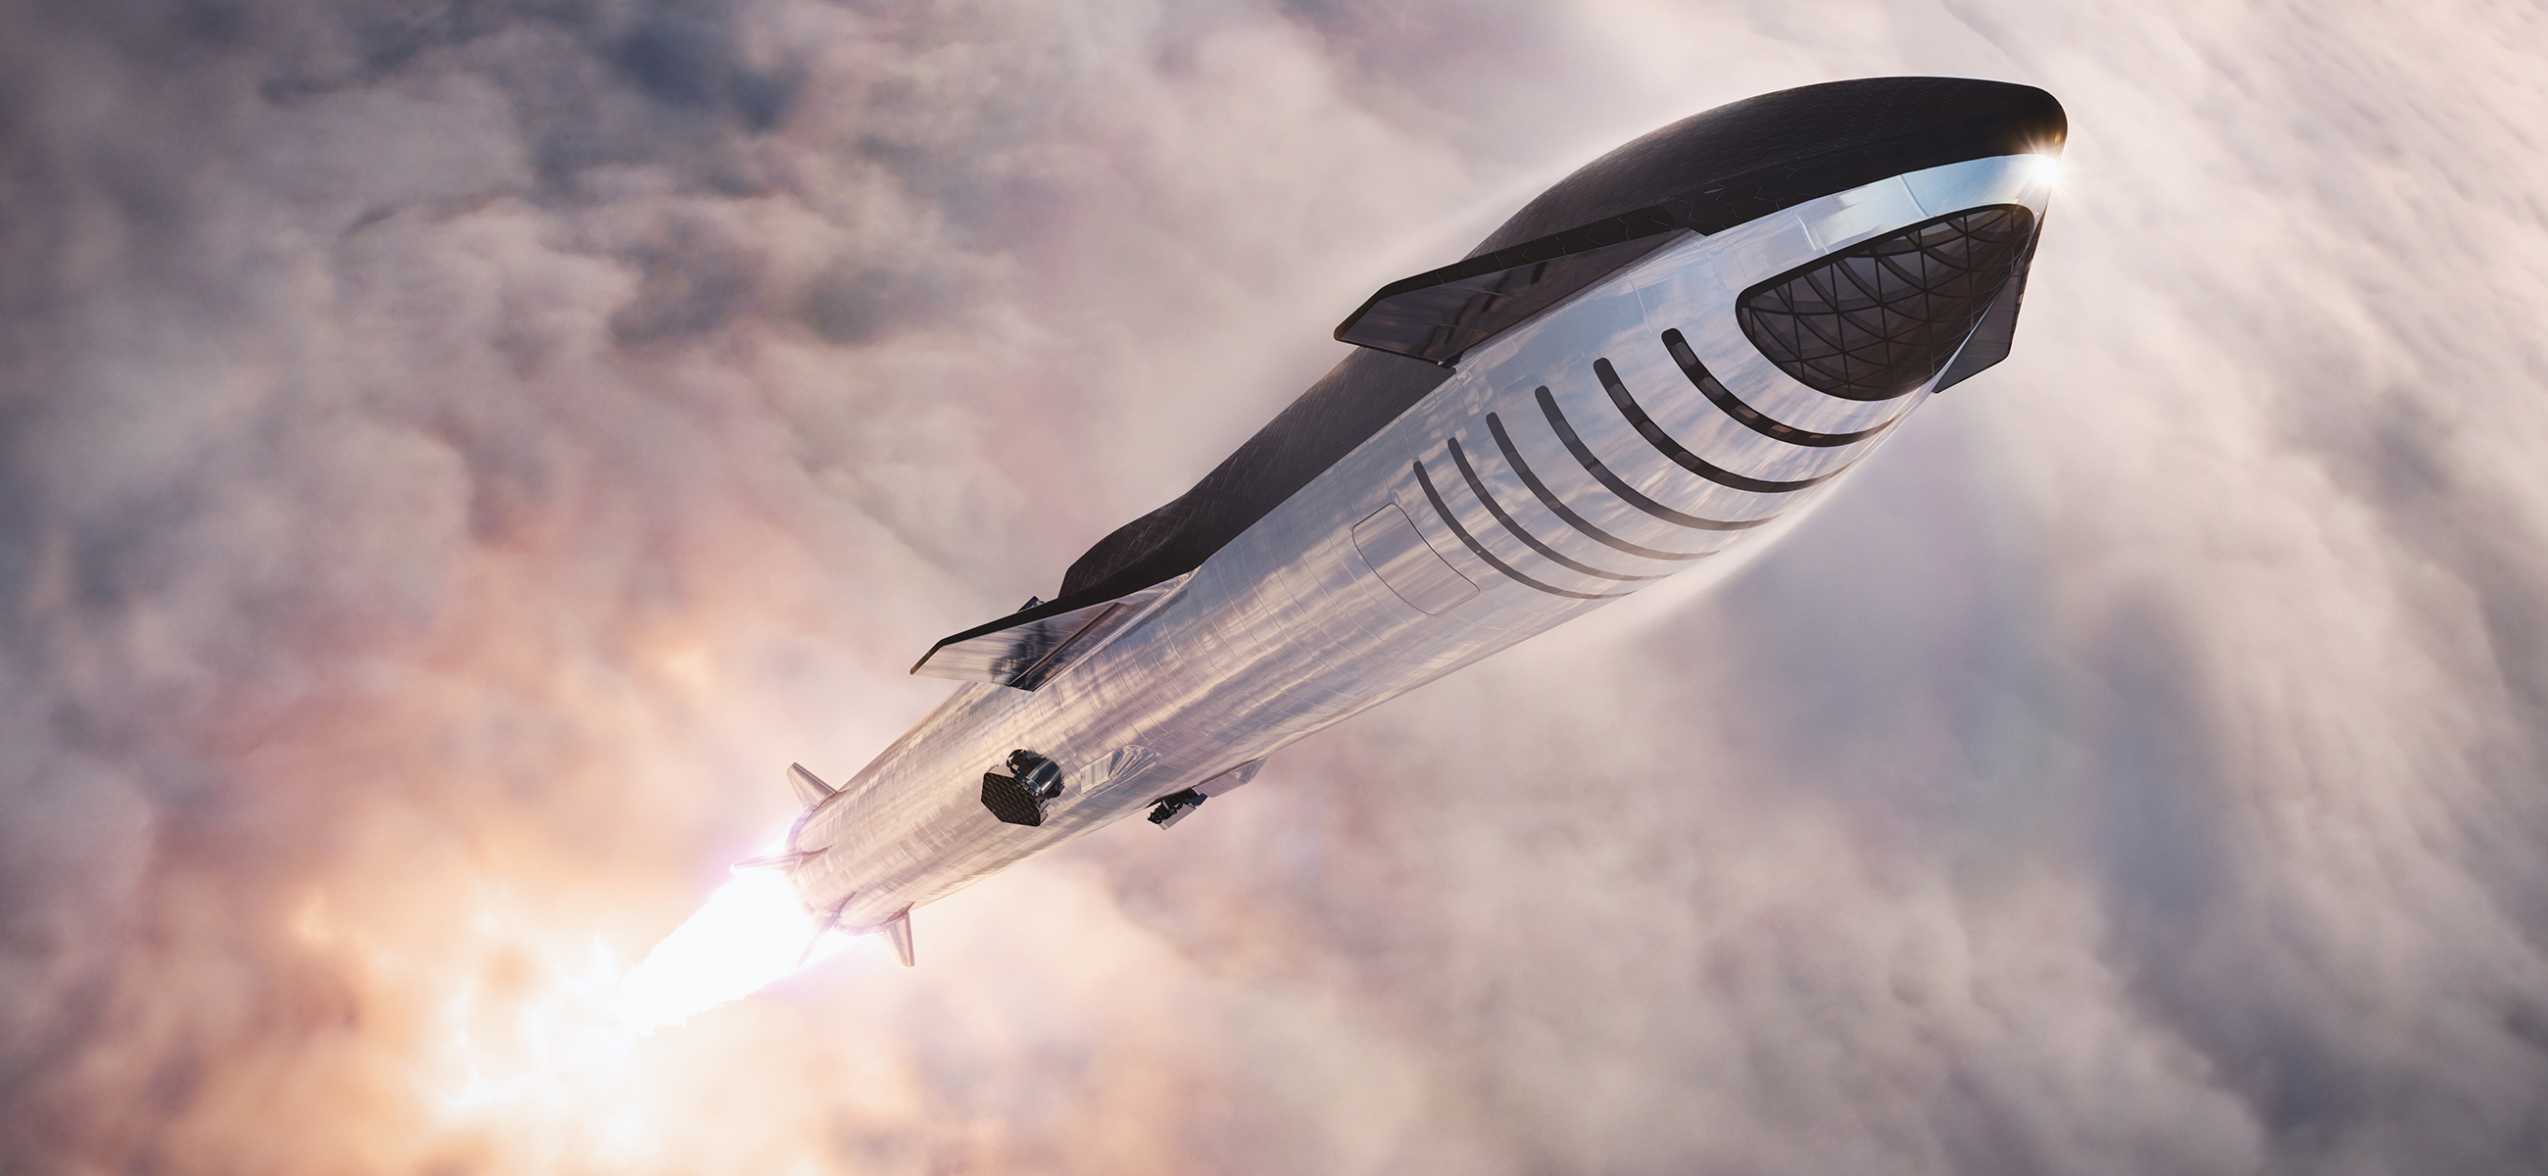 Starship-Super-Heavy-launch-render-May-2020-SpaceX-1-c.jpg